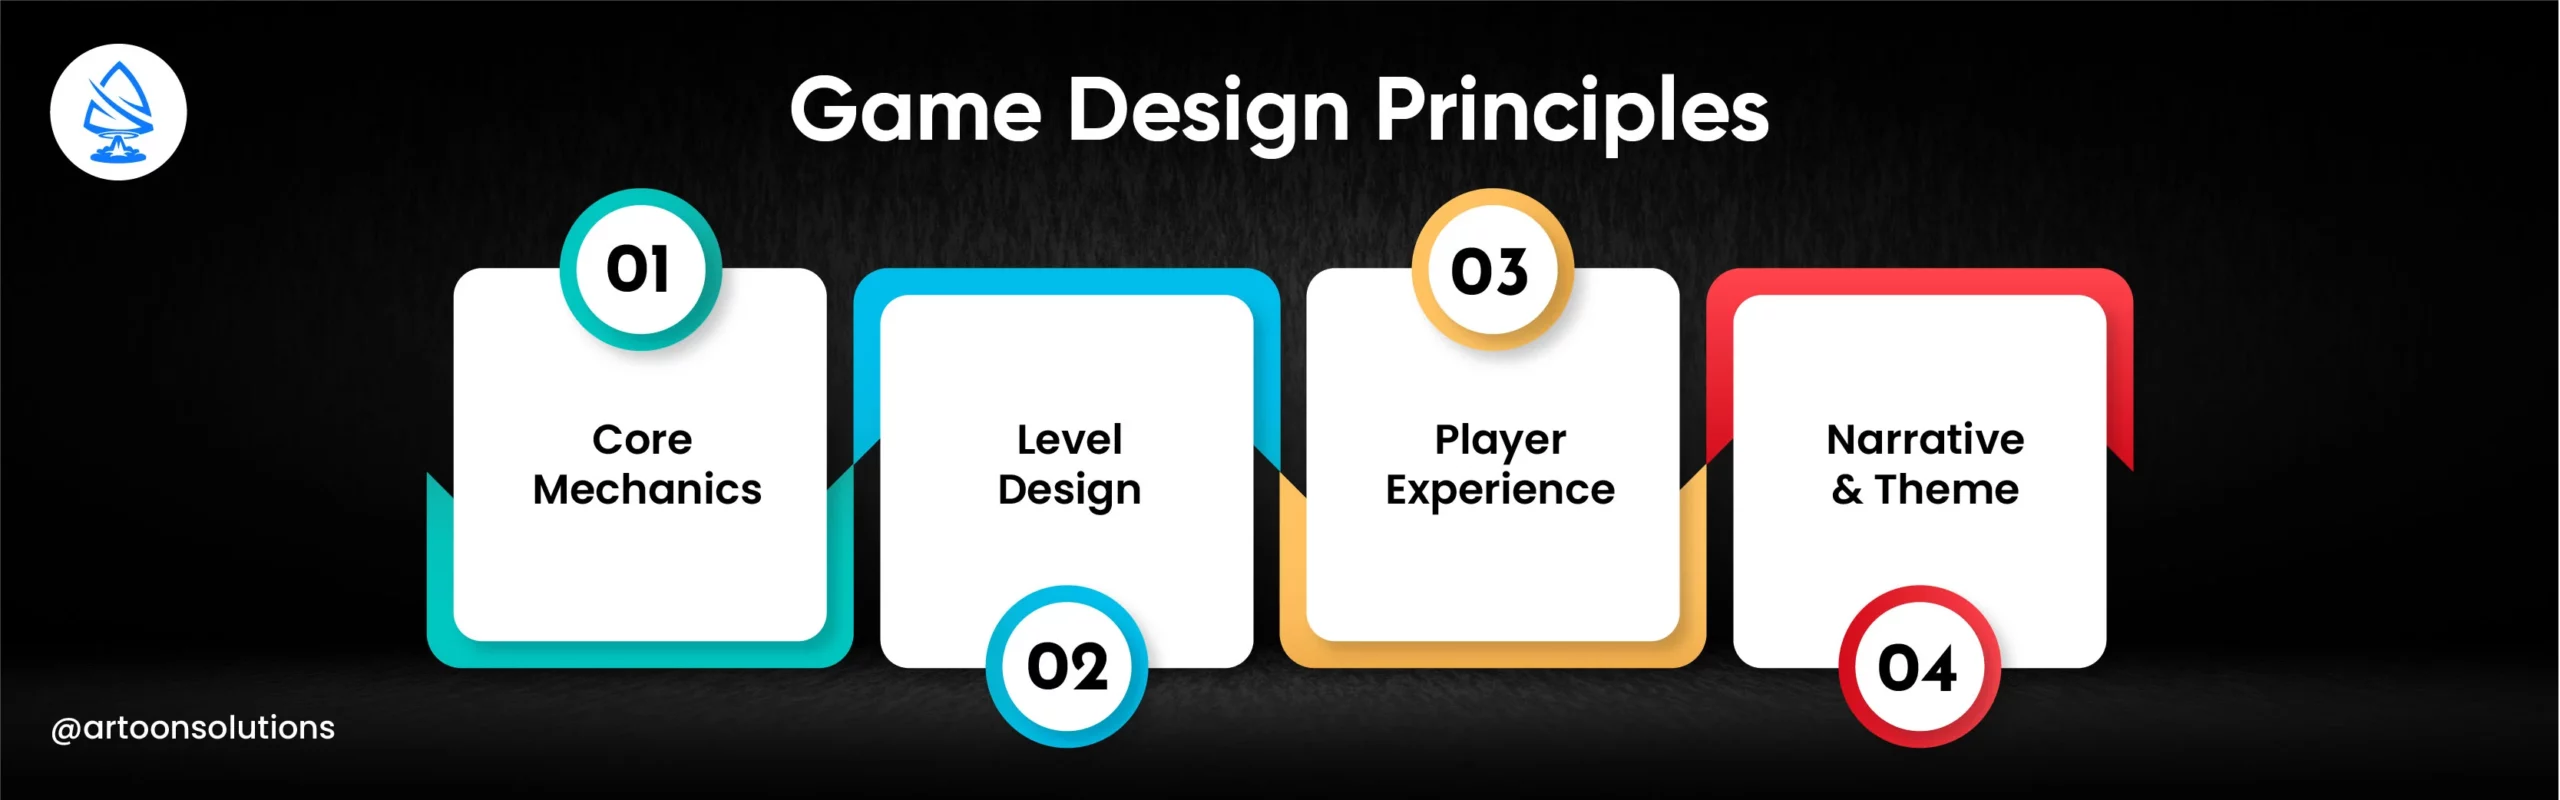 Game Design Principles